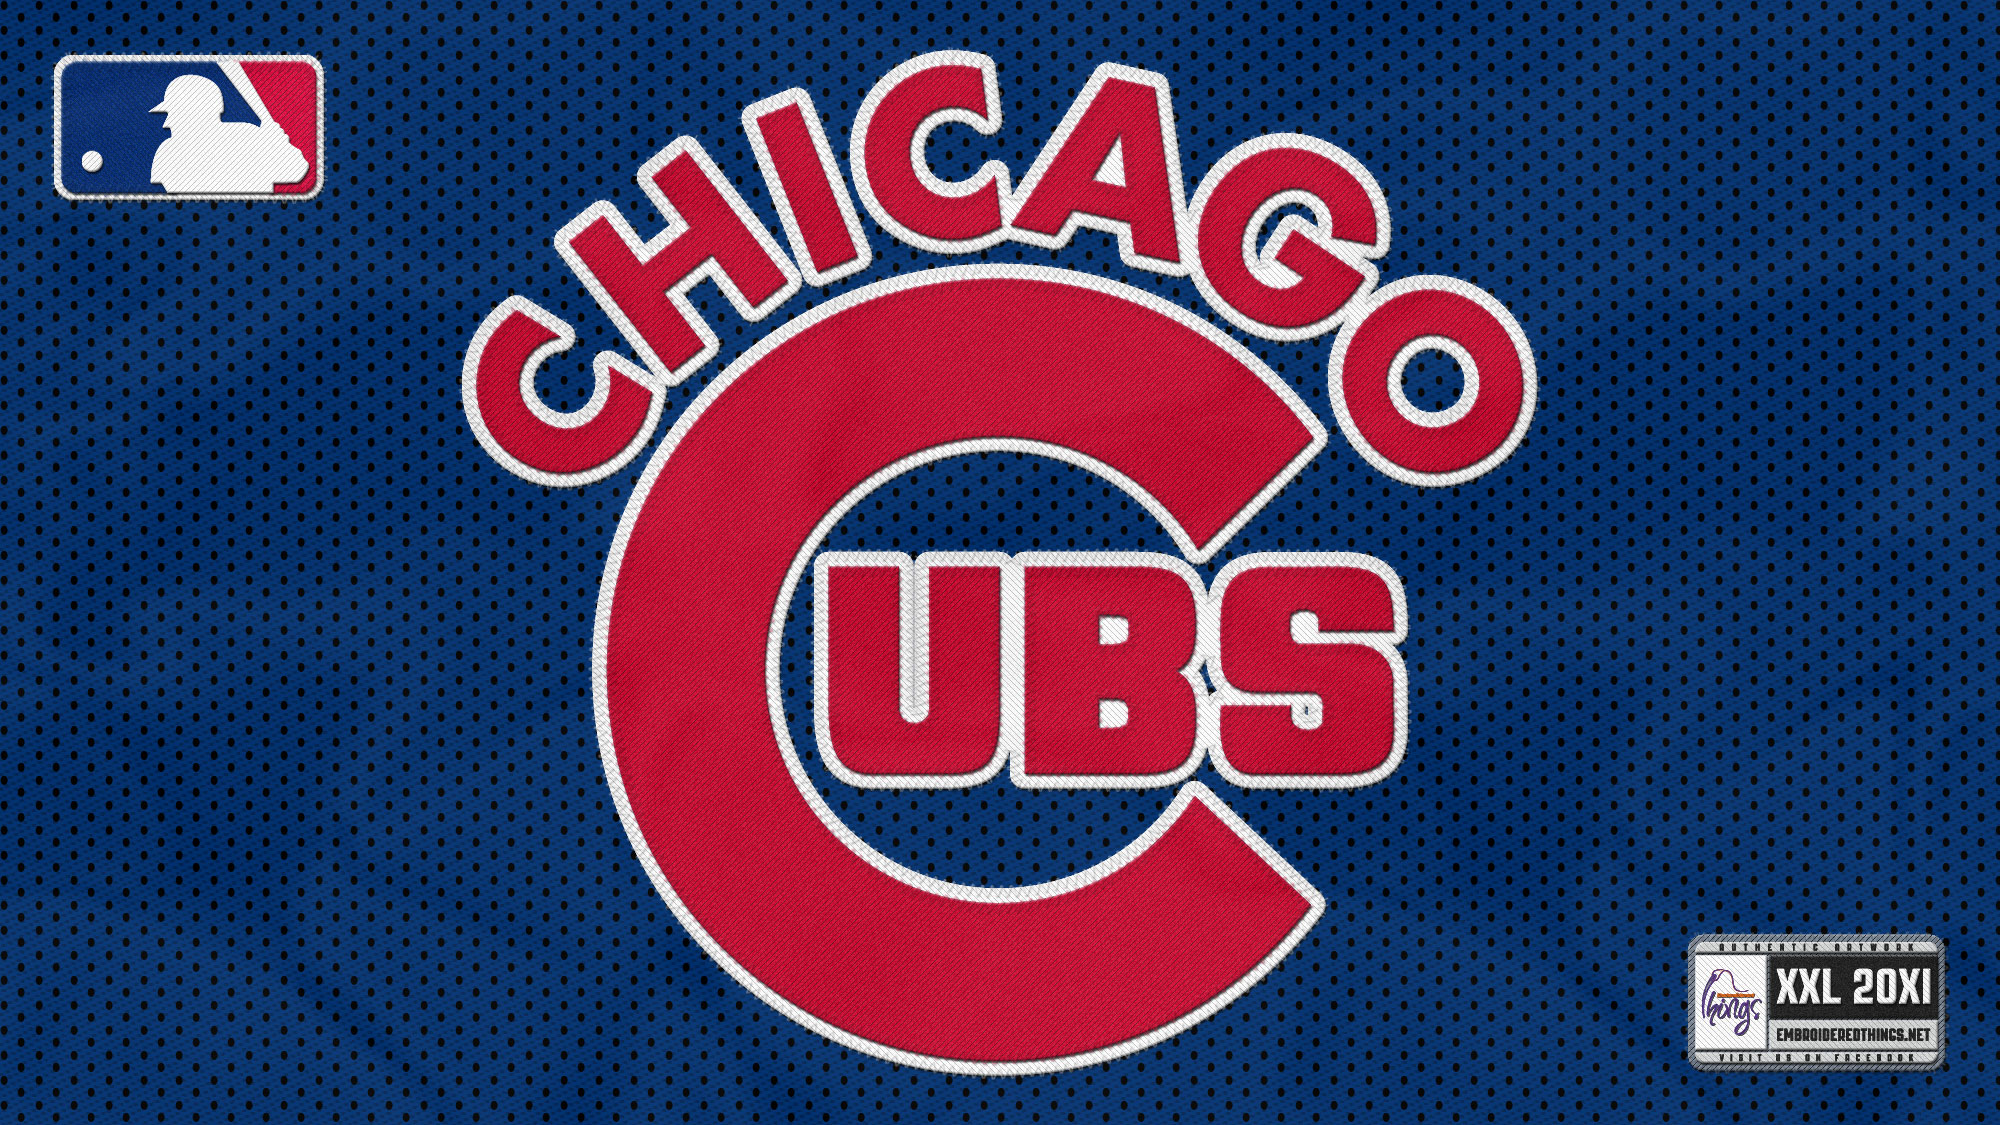 CHICAGO CUBS mlb baseball 9 wallpaper 2000x1125 232516 2000x1125